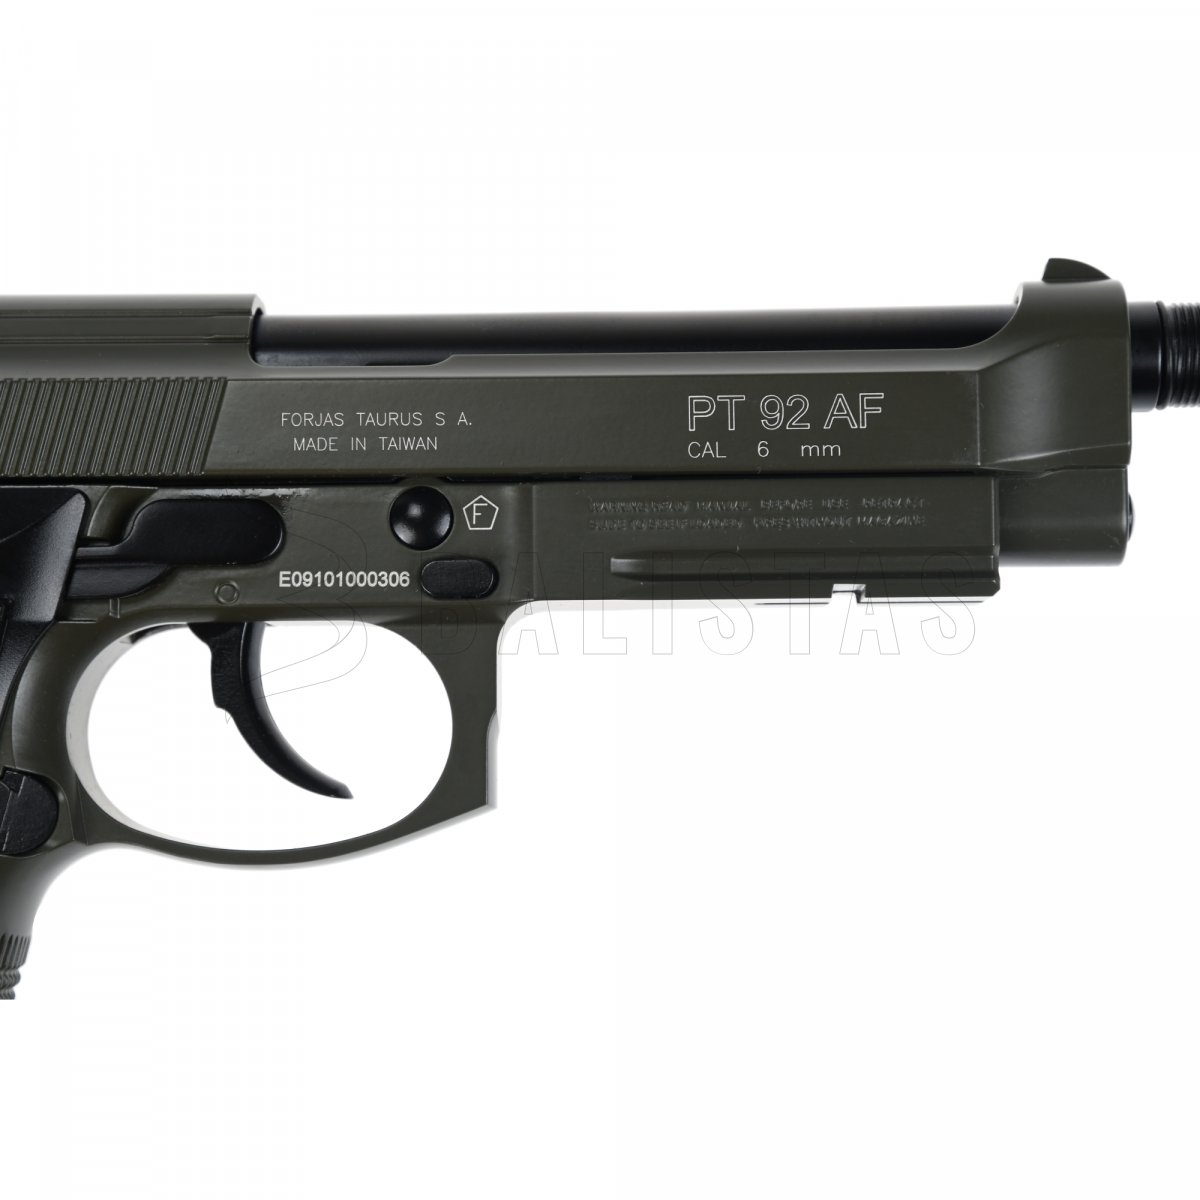 Airsoft pistole CYBG Taurus PT92 CO2 OD